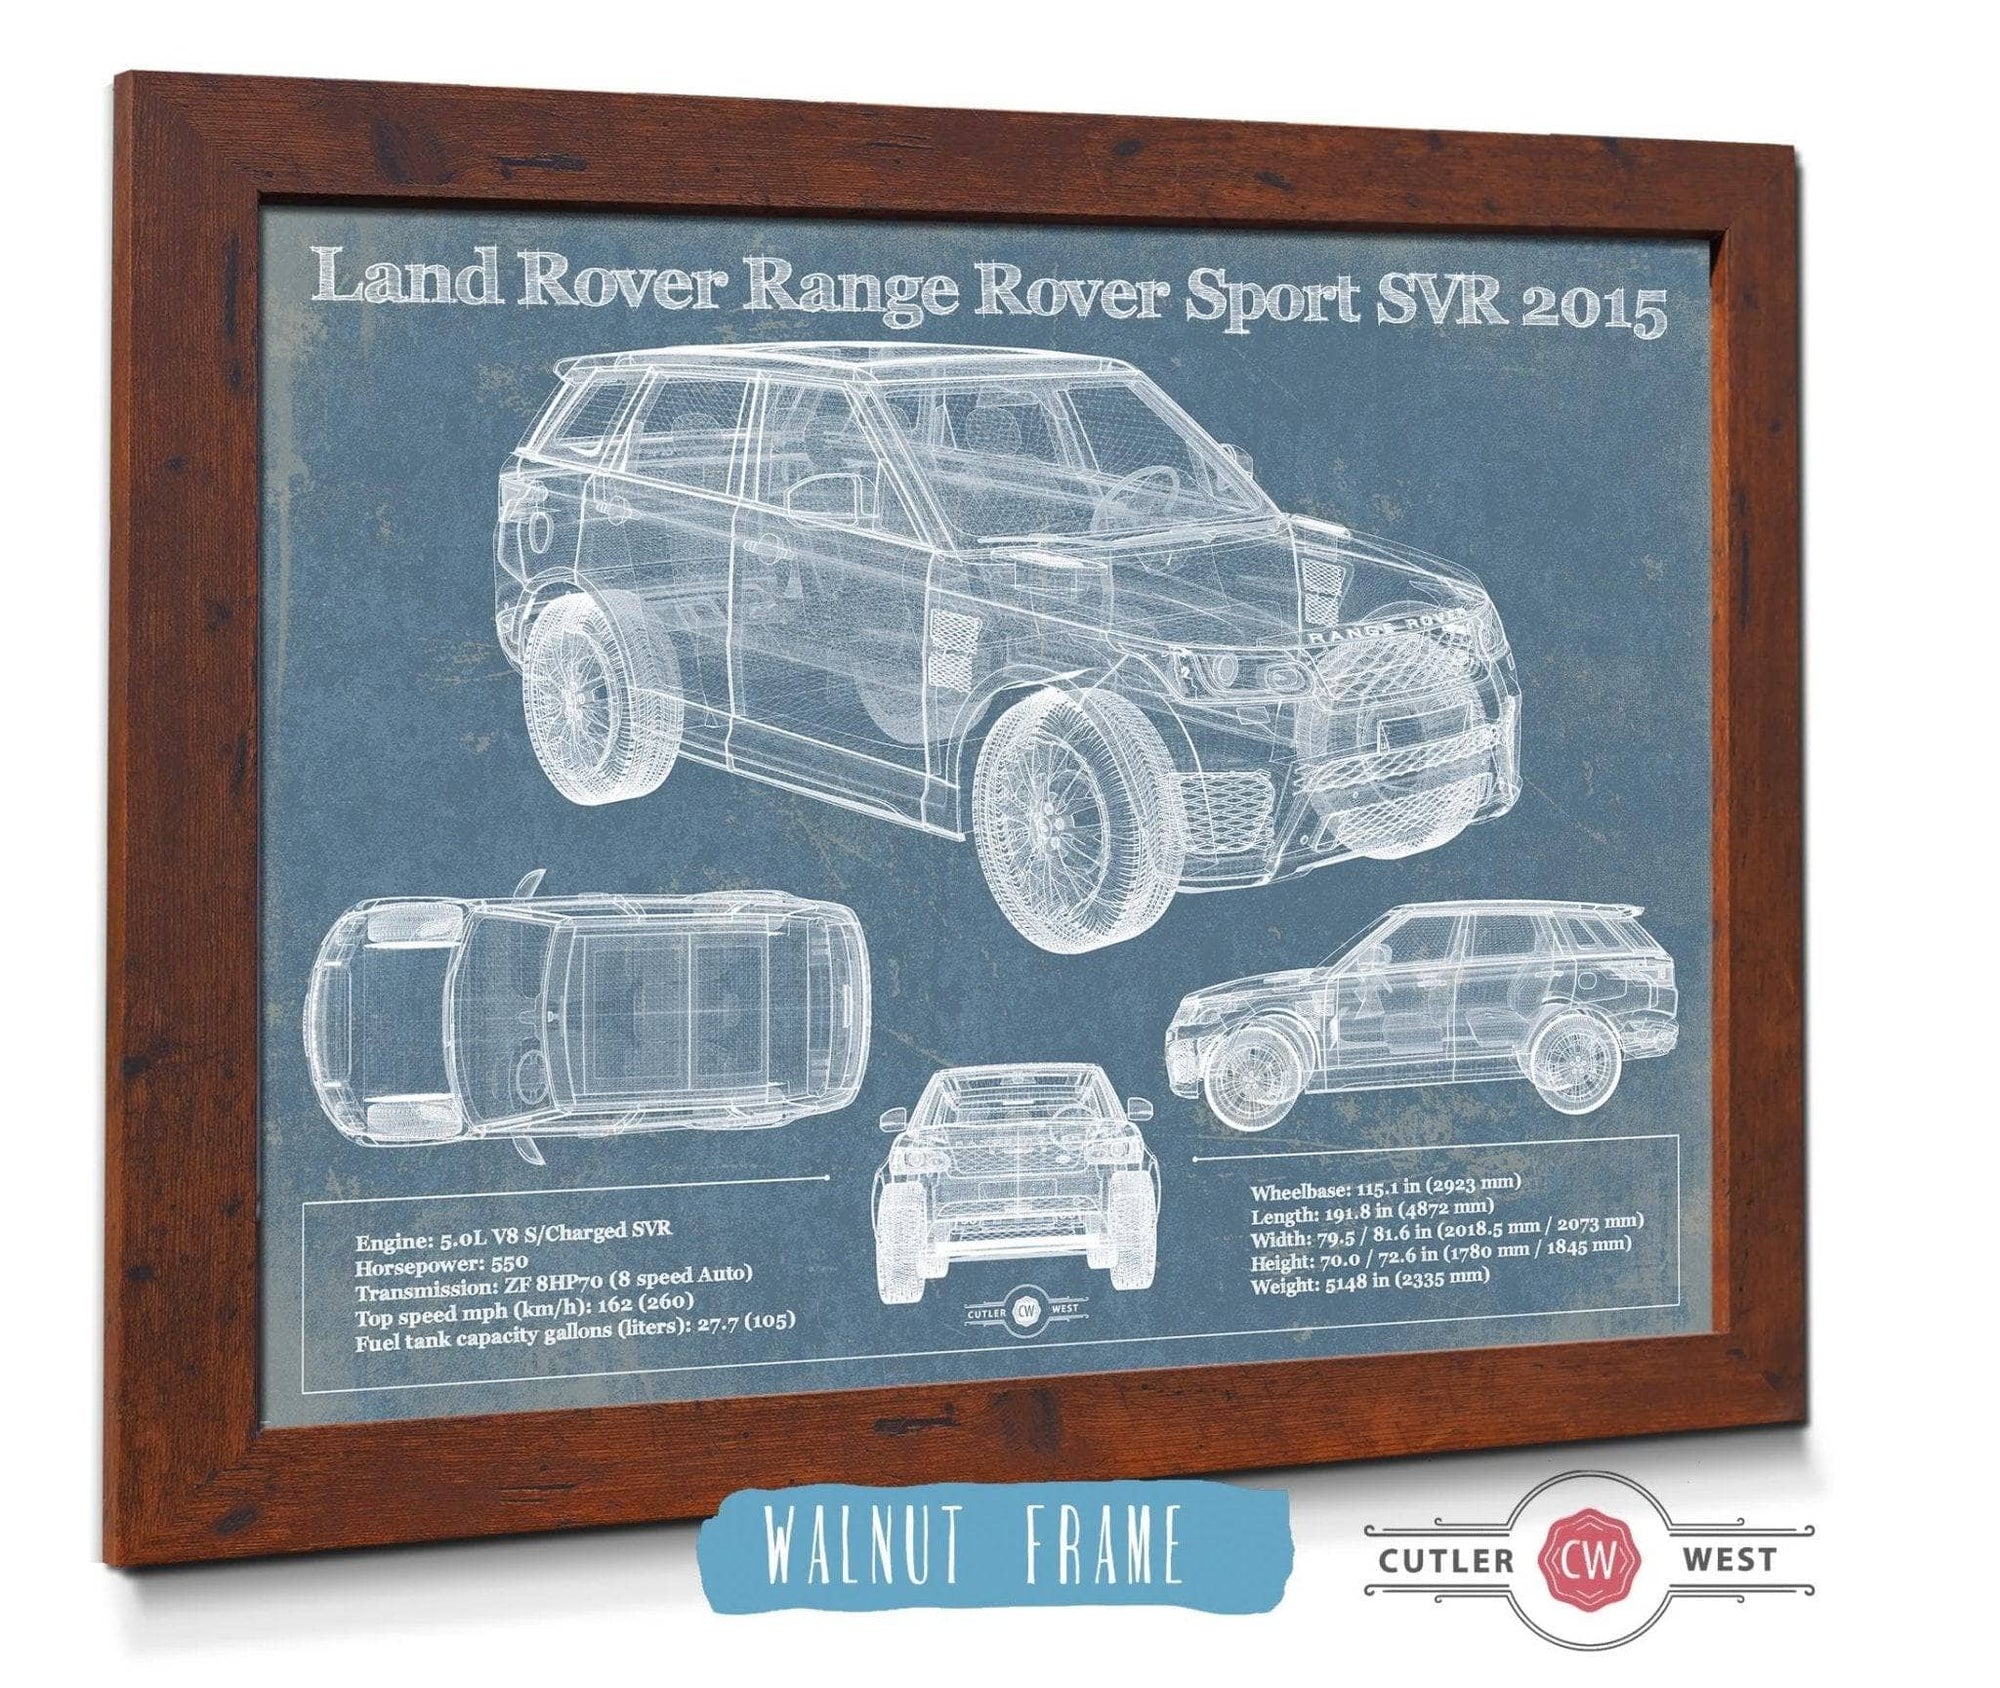 Cutler West Land Rover Collection 14" x 11" / Walnut Frame Land Rover Range Rover Sport SVR 2015 Vintage Blueprint Auto Print 833110165_13523